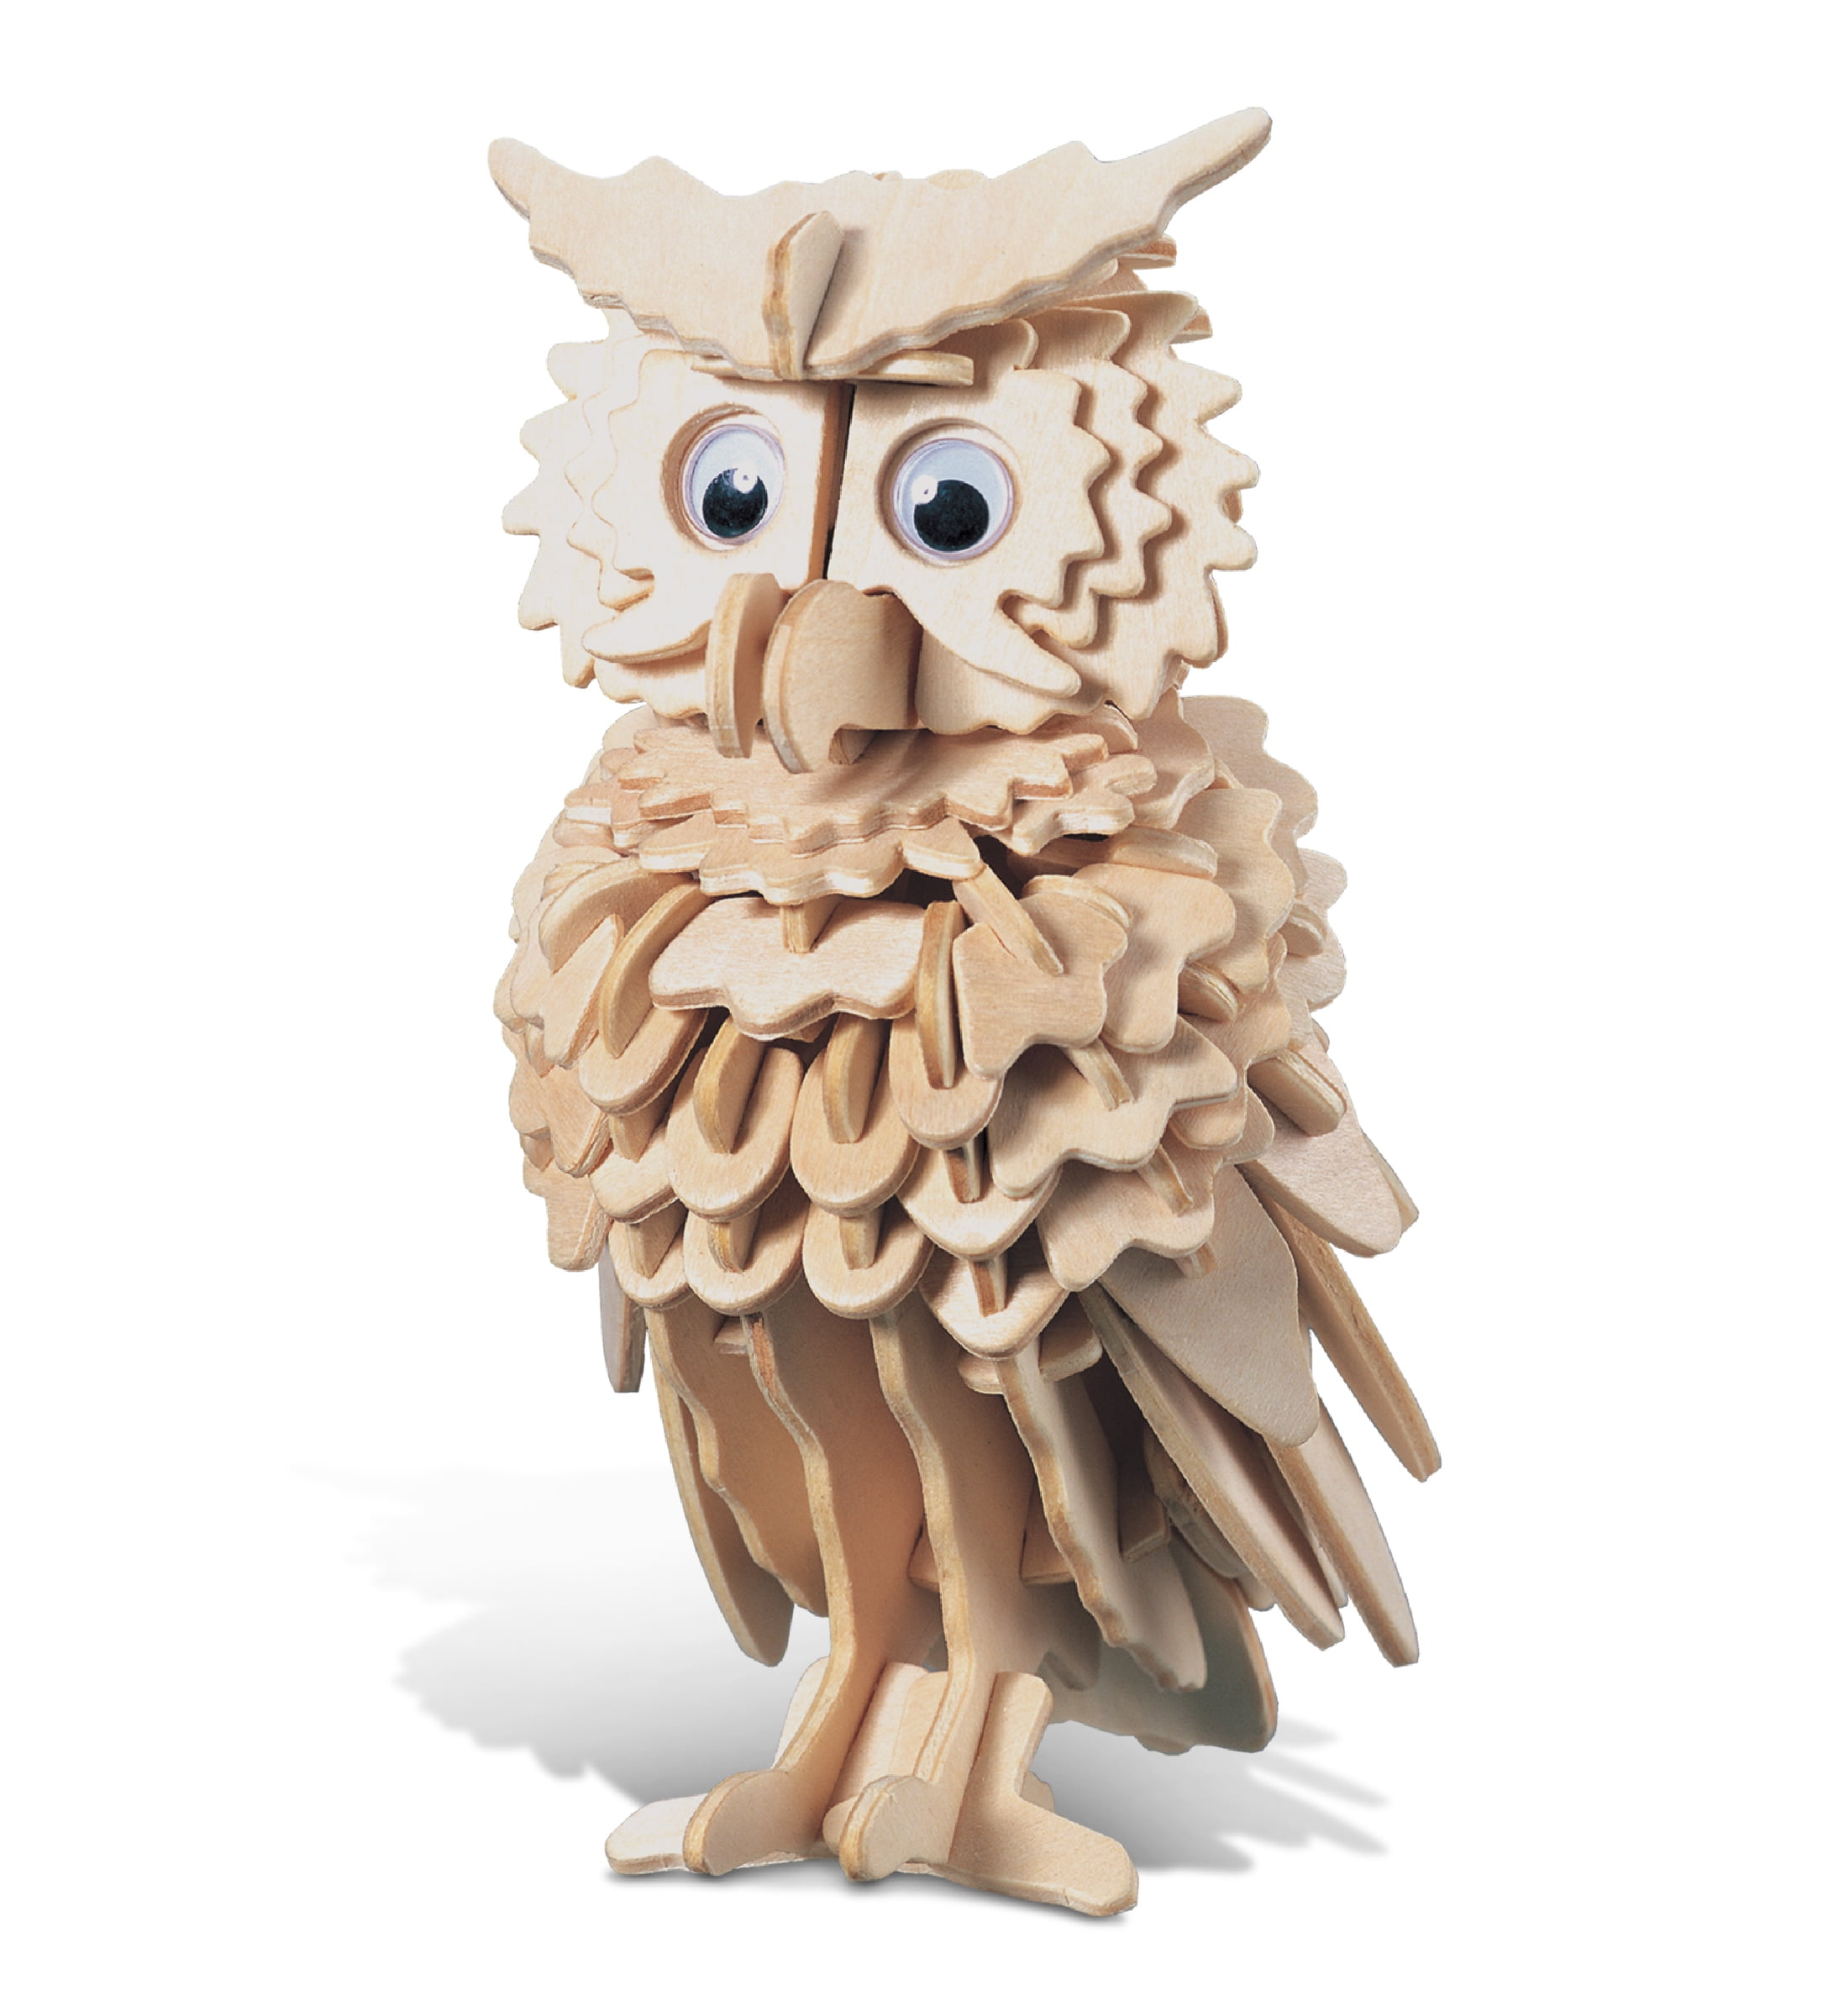 3D Woodcraft Wooden Owl Puzzle Construction Bird Jigsaw Kids Kit DIY Toy 